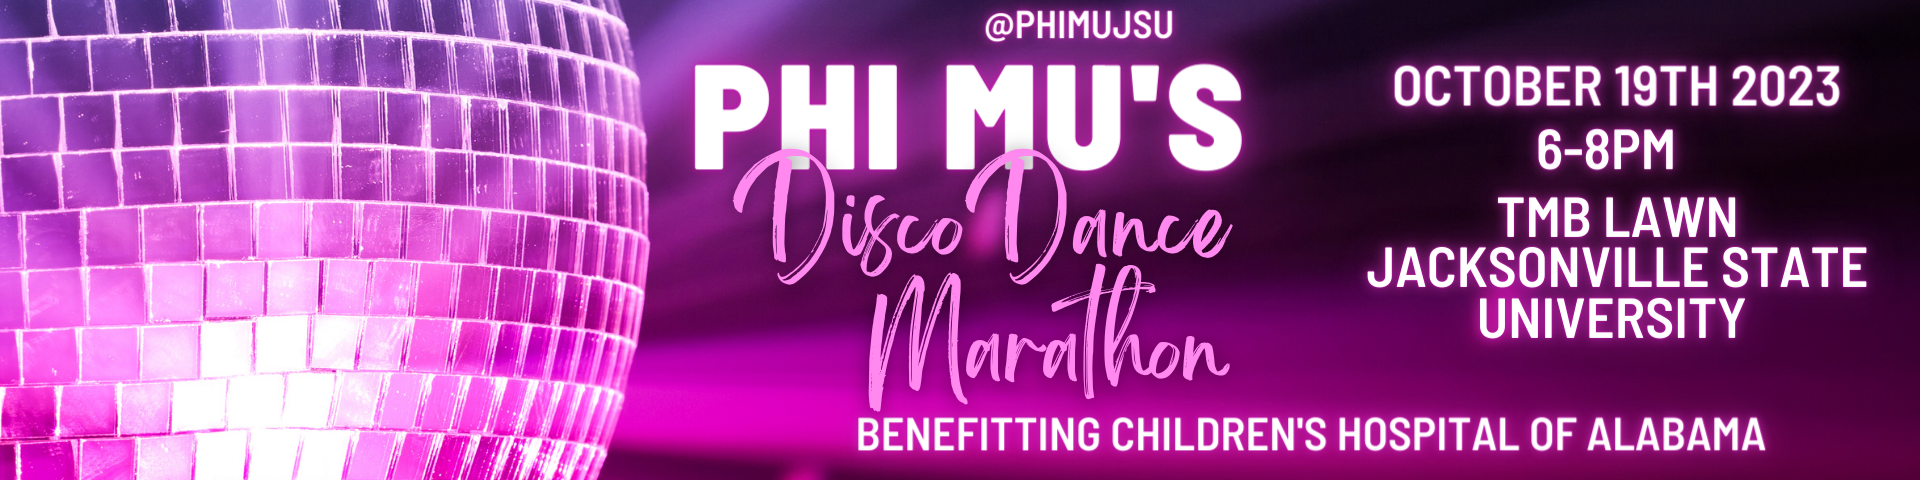 Phi Mu's Disco Dance Marathon! October 19th 2023 at JSU TMB Lawn